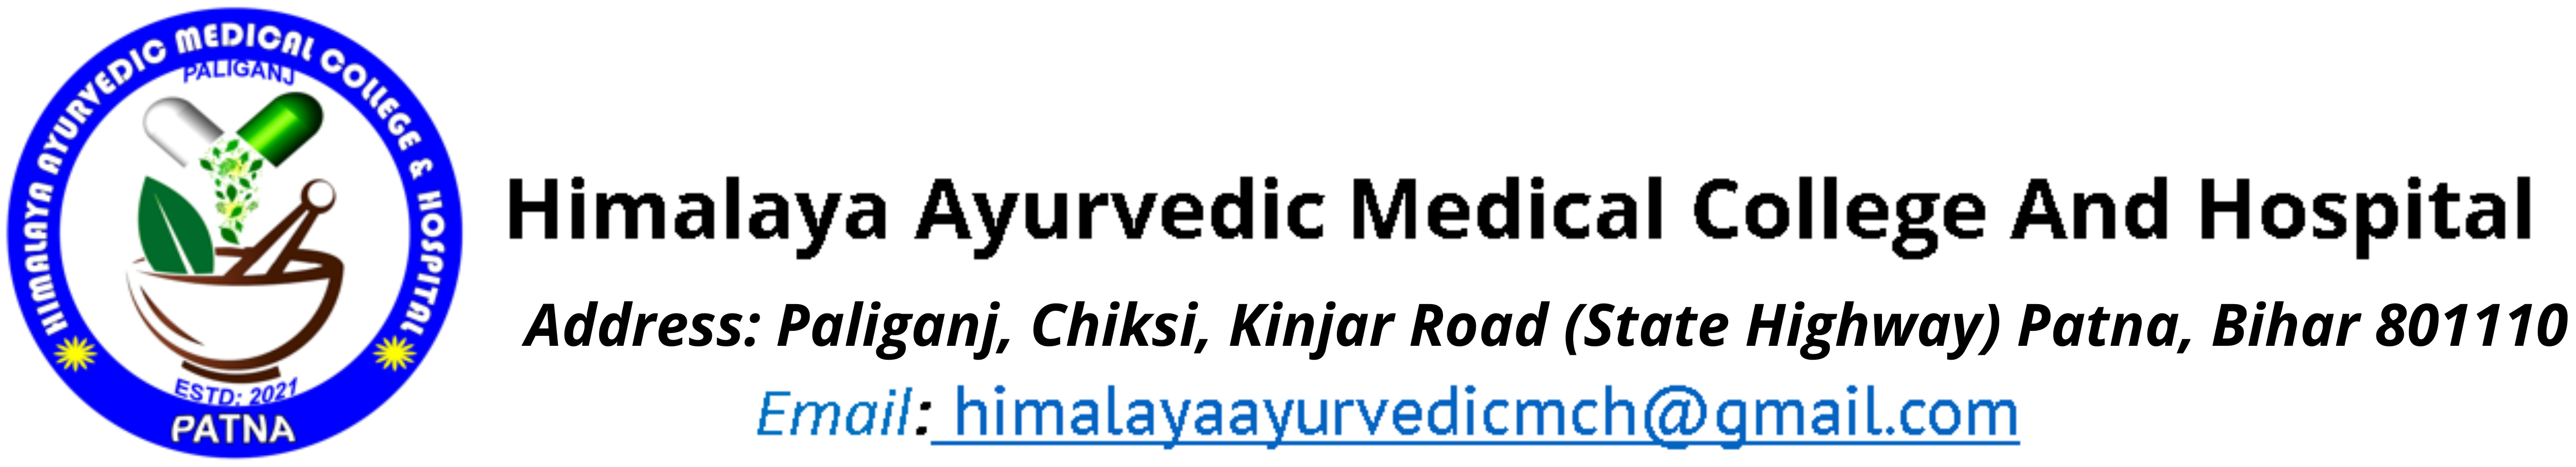 Himalaya Ayurvedic Medical College and Hospital